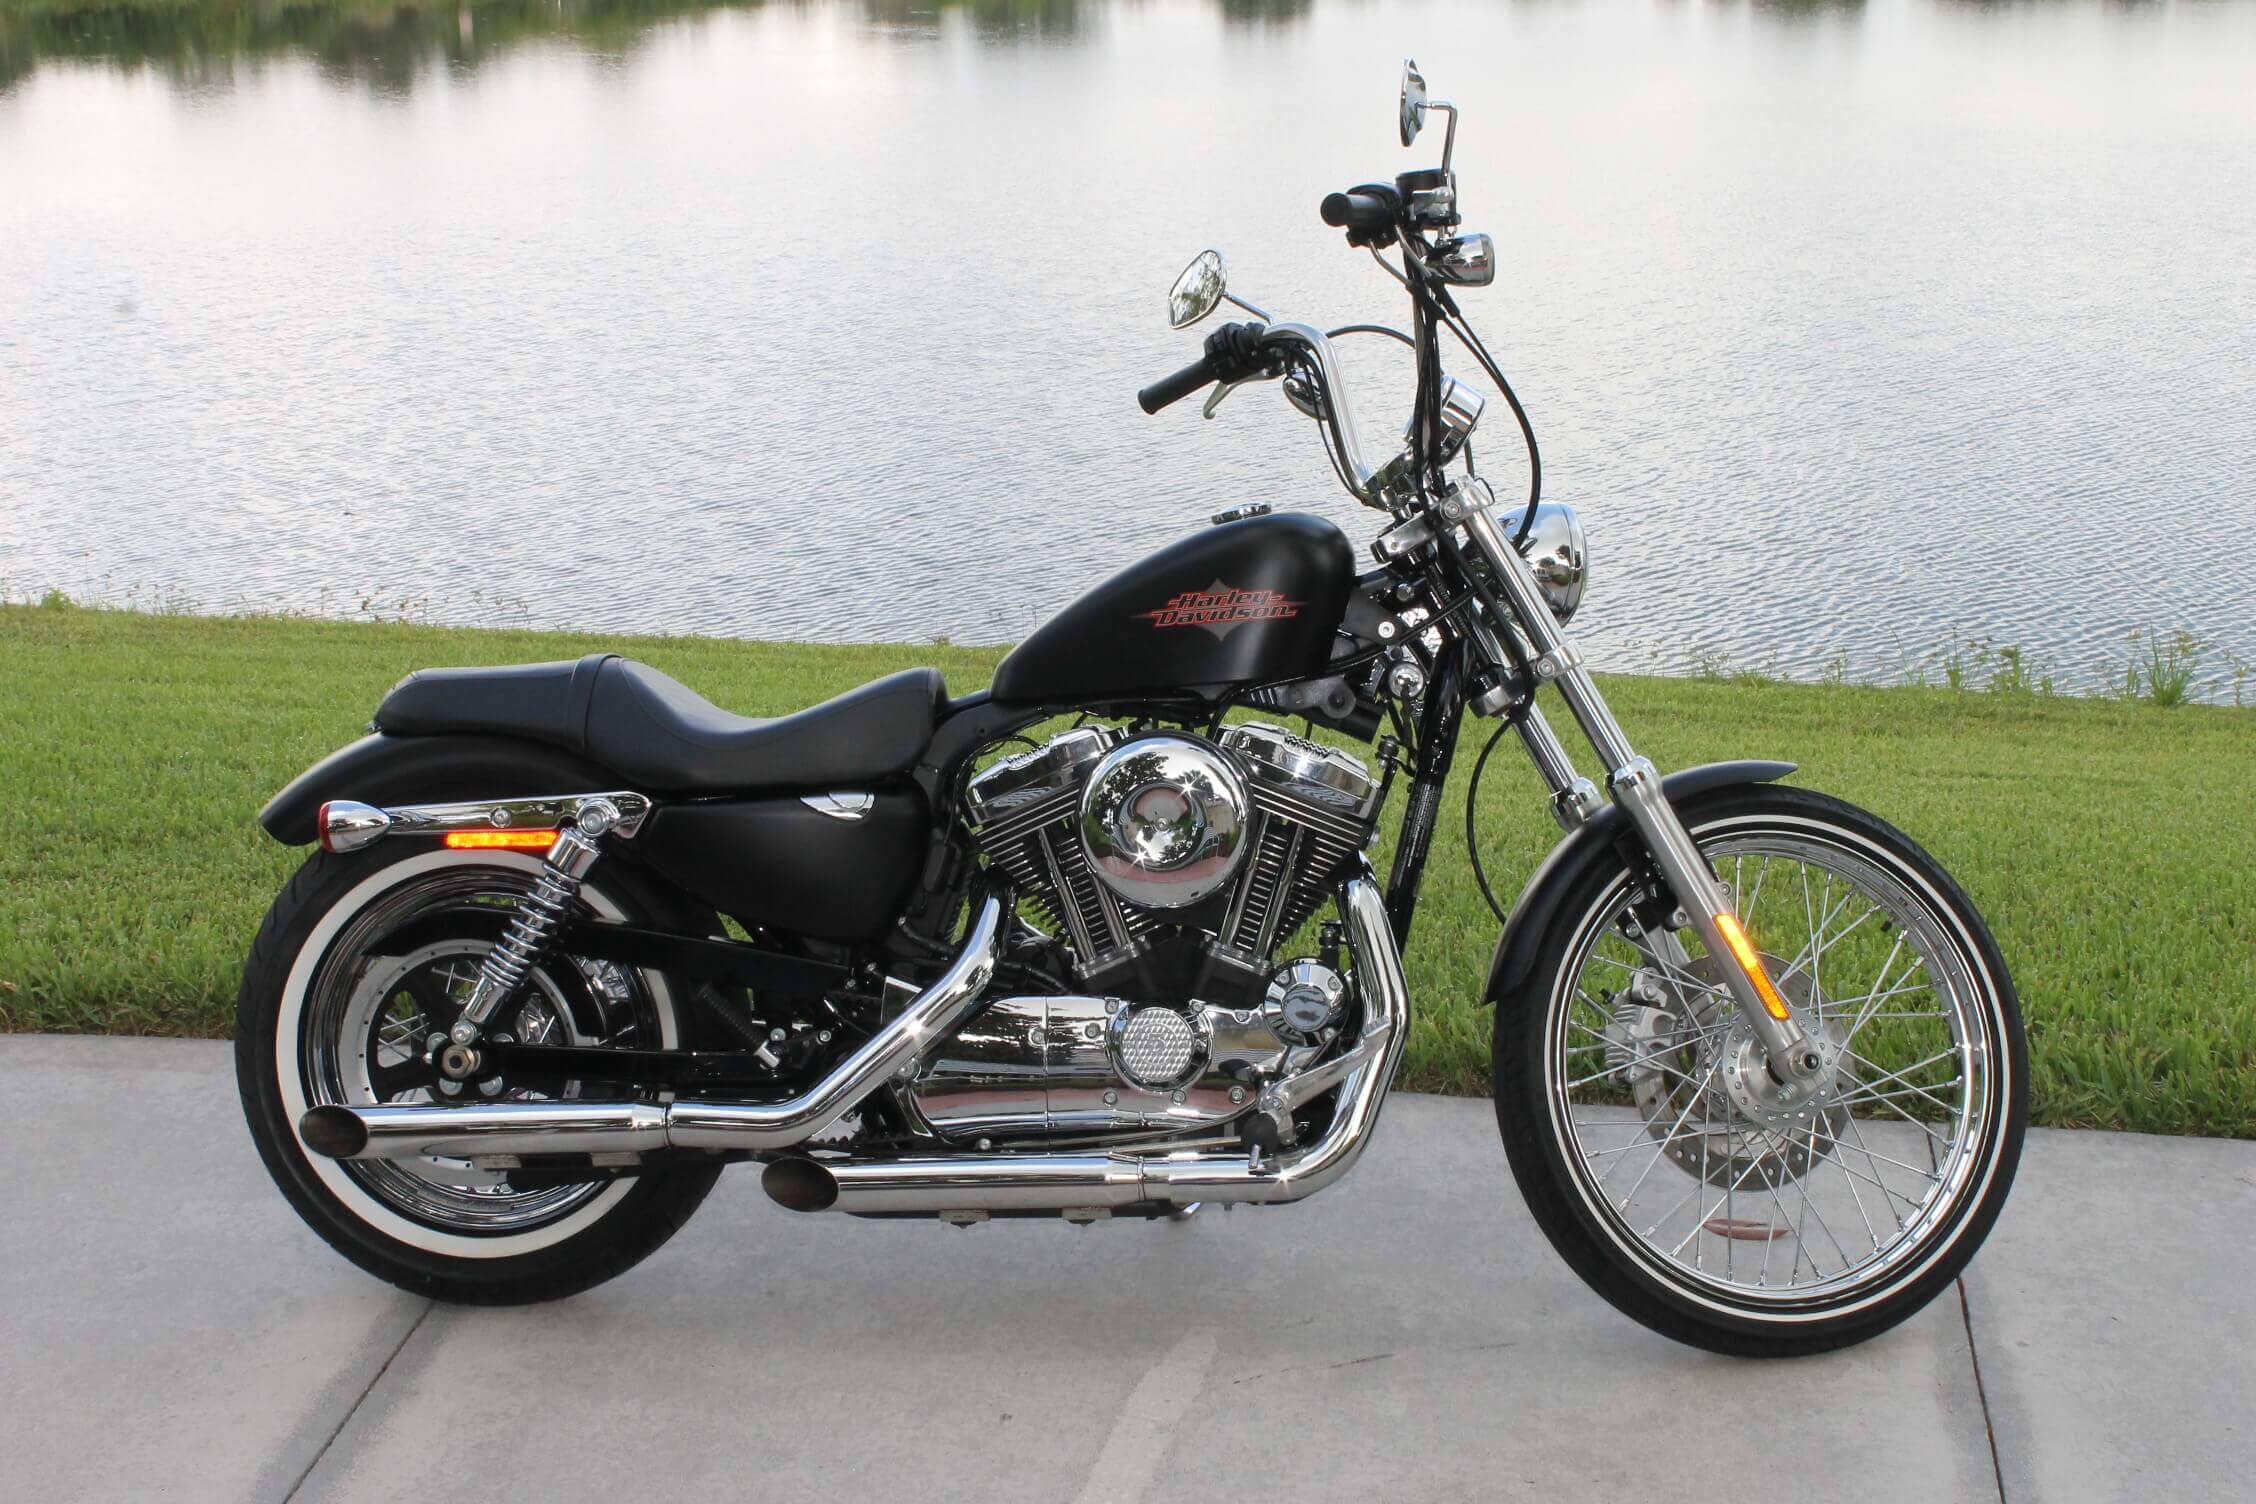 image of Harley Davidson motorcycles